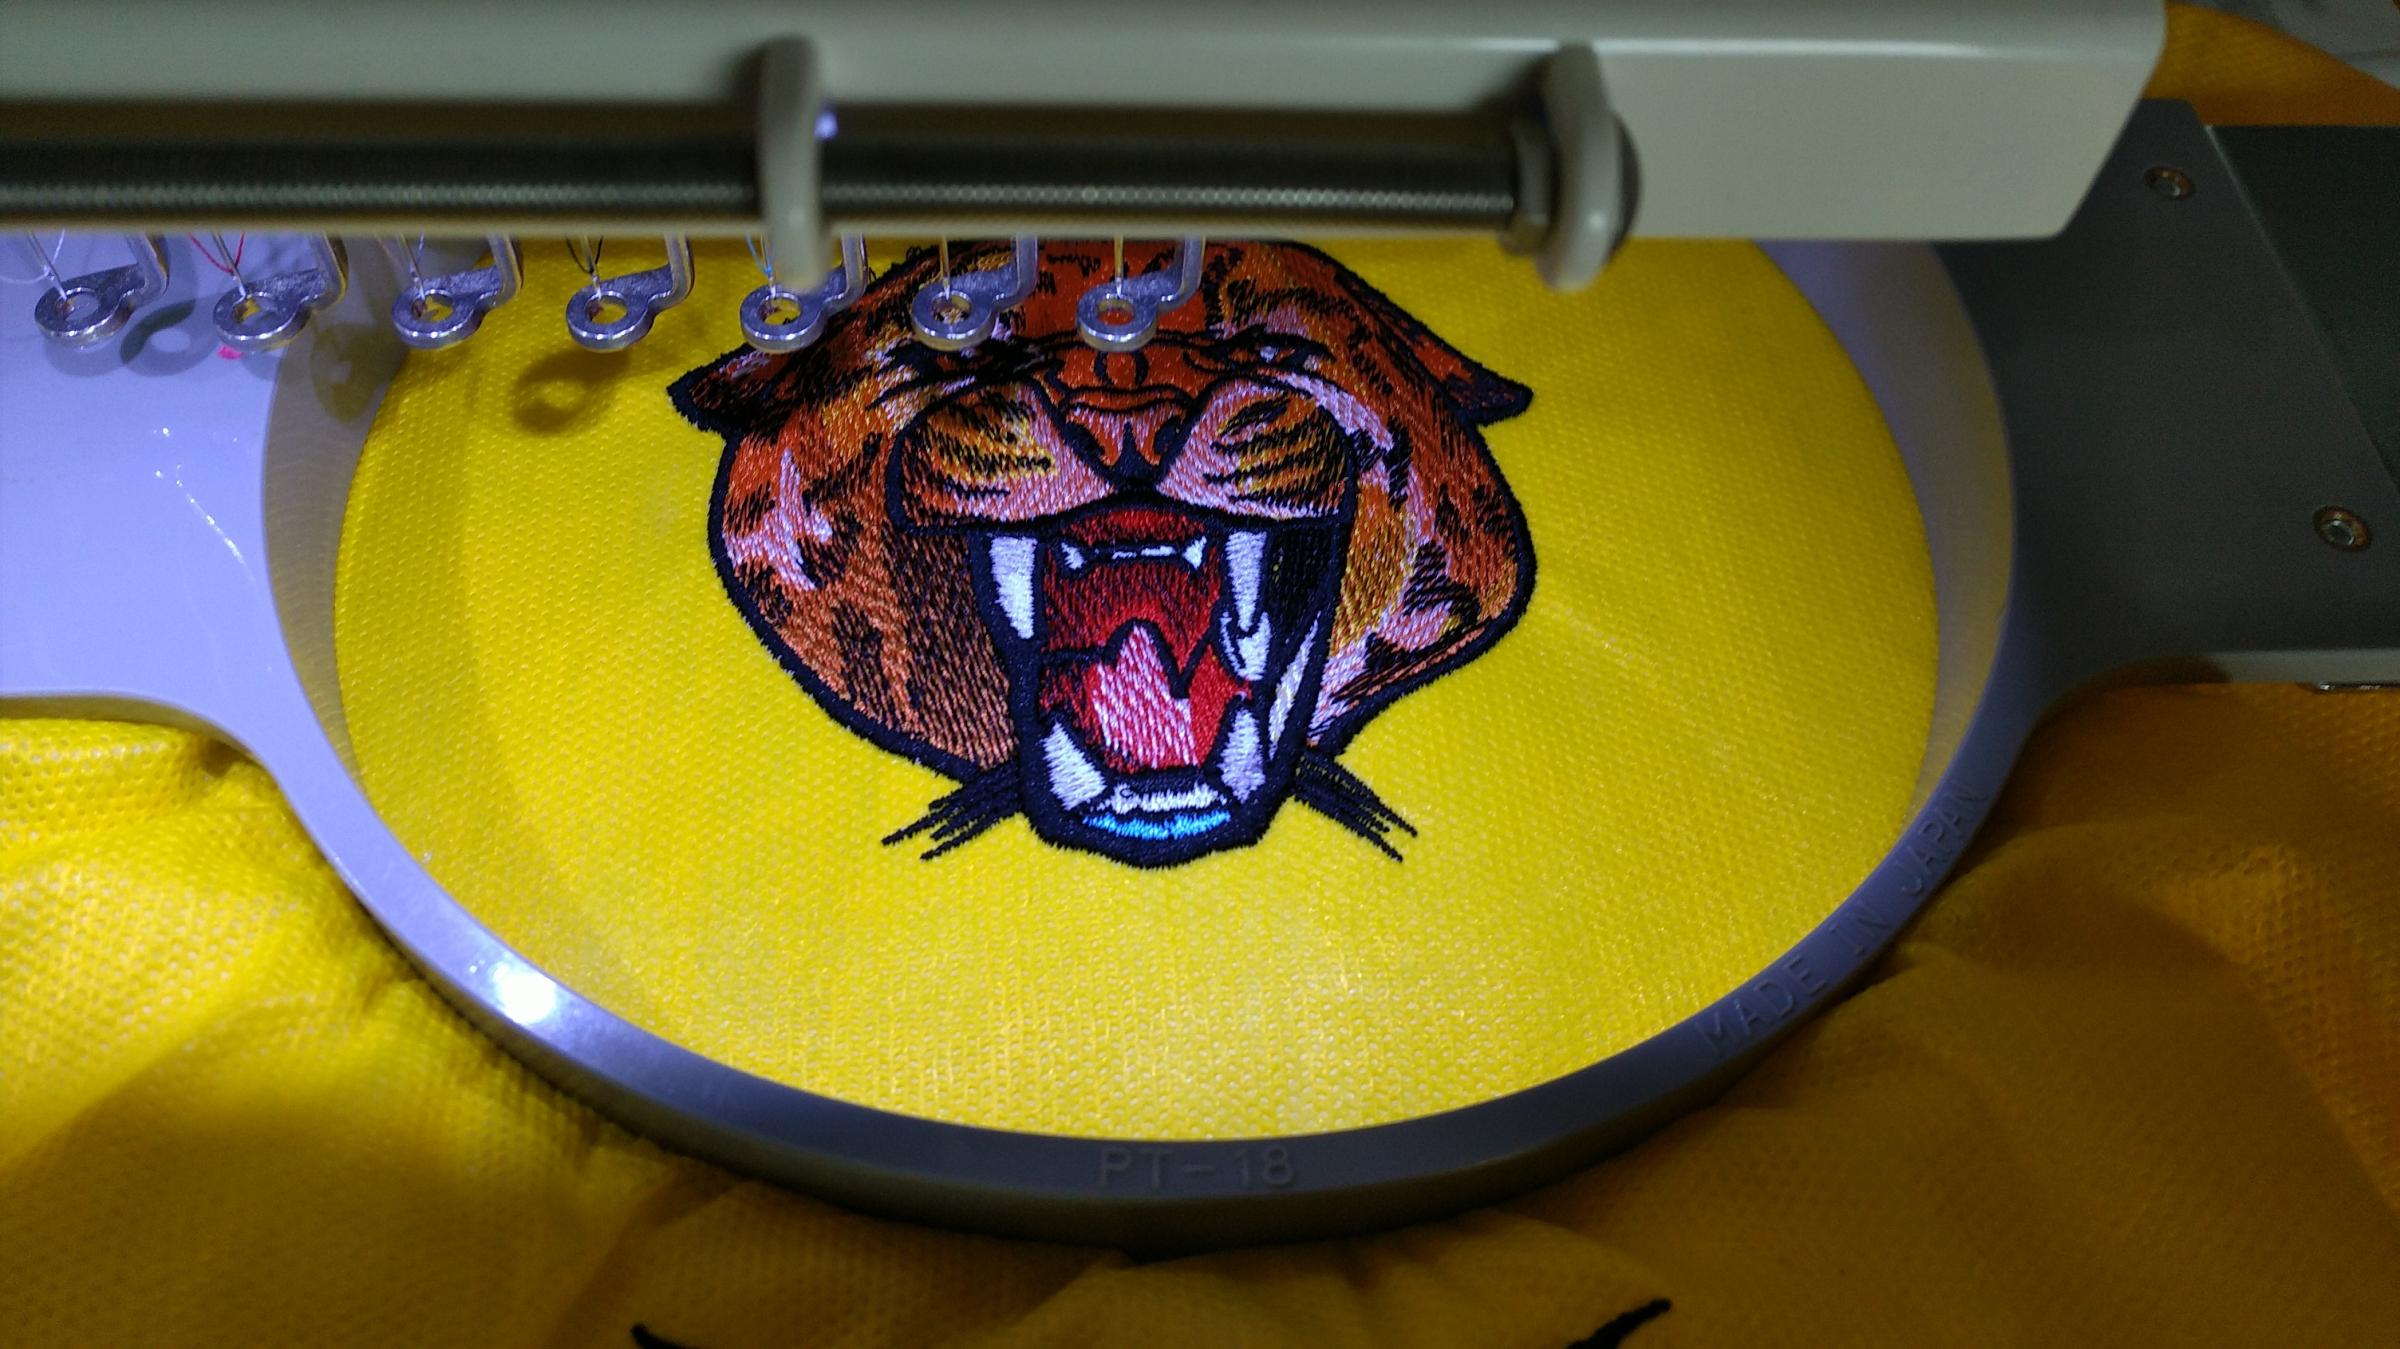 Wild cheetah embroidery design in progress